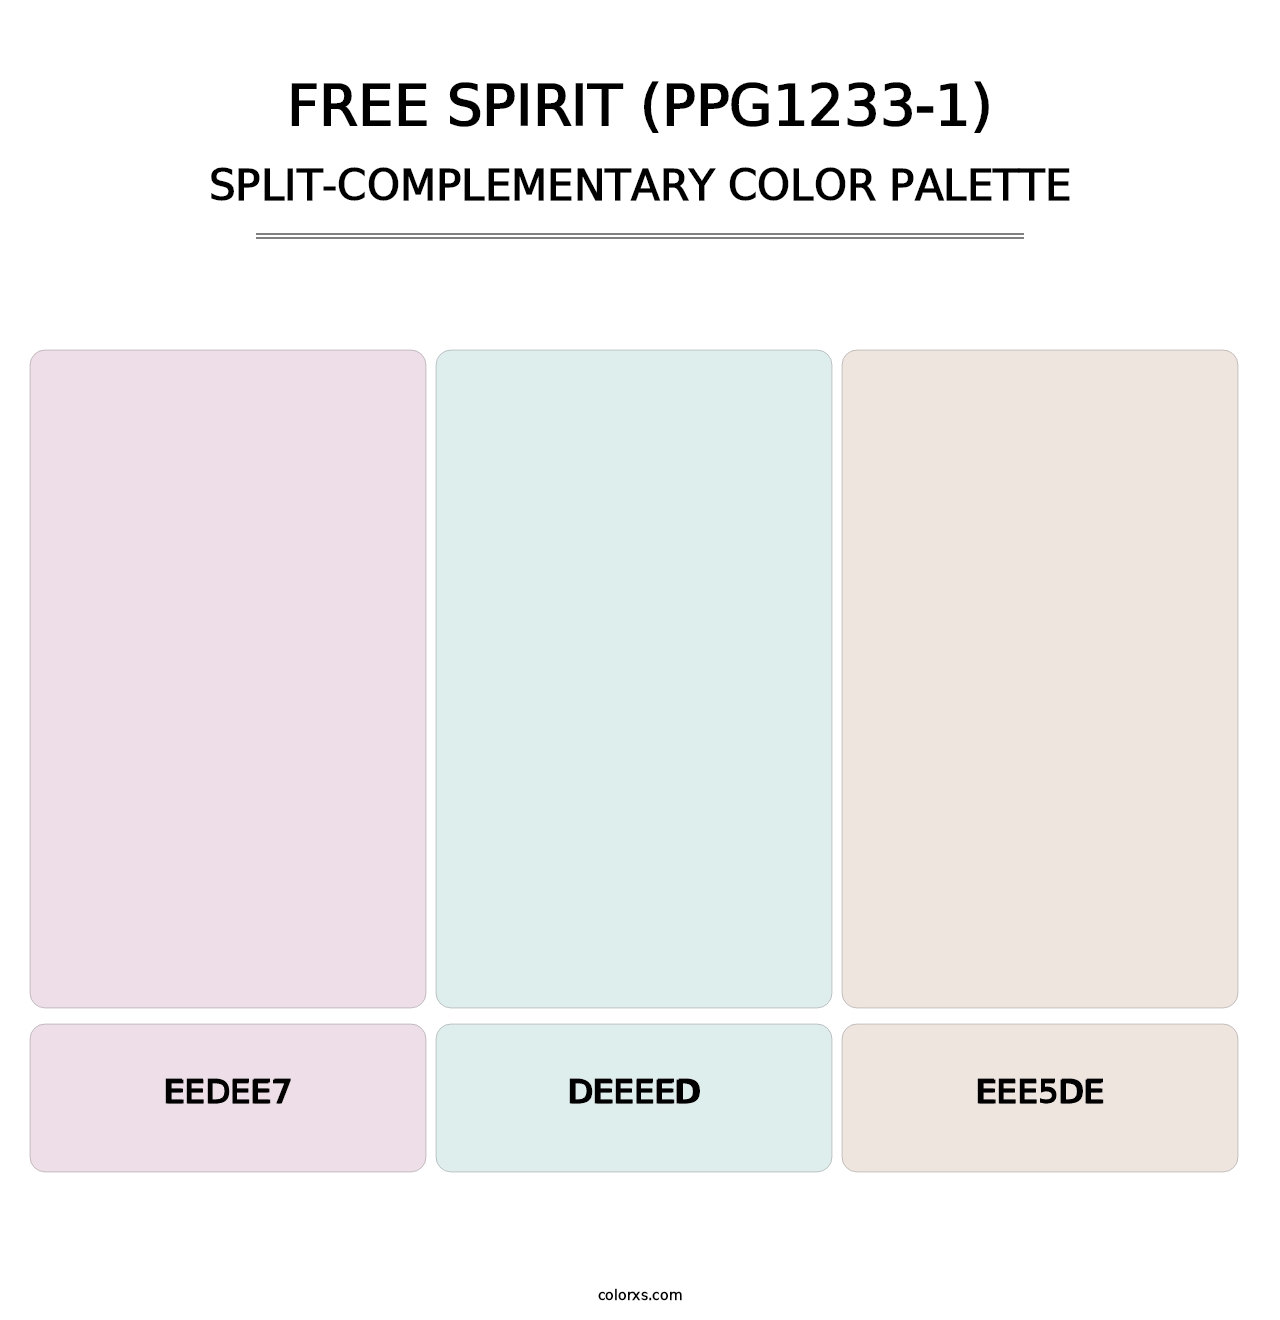 Free Spirit (PPG1233-1) - Split-Complementary Color Palette